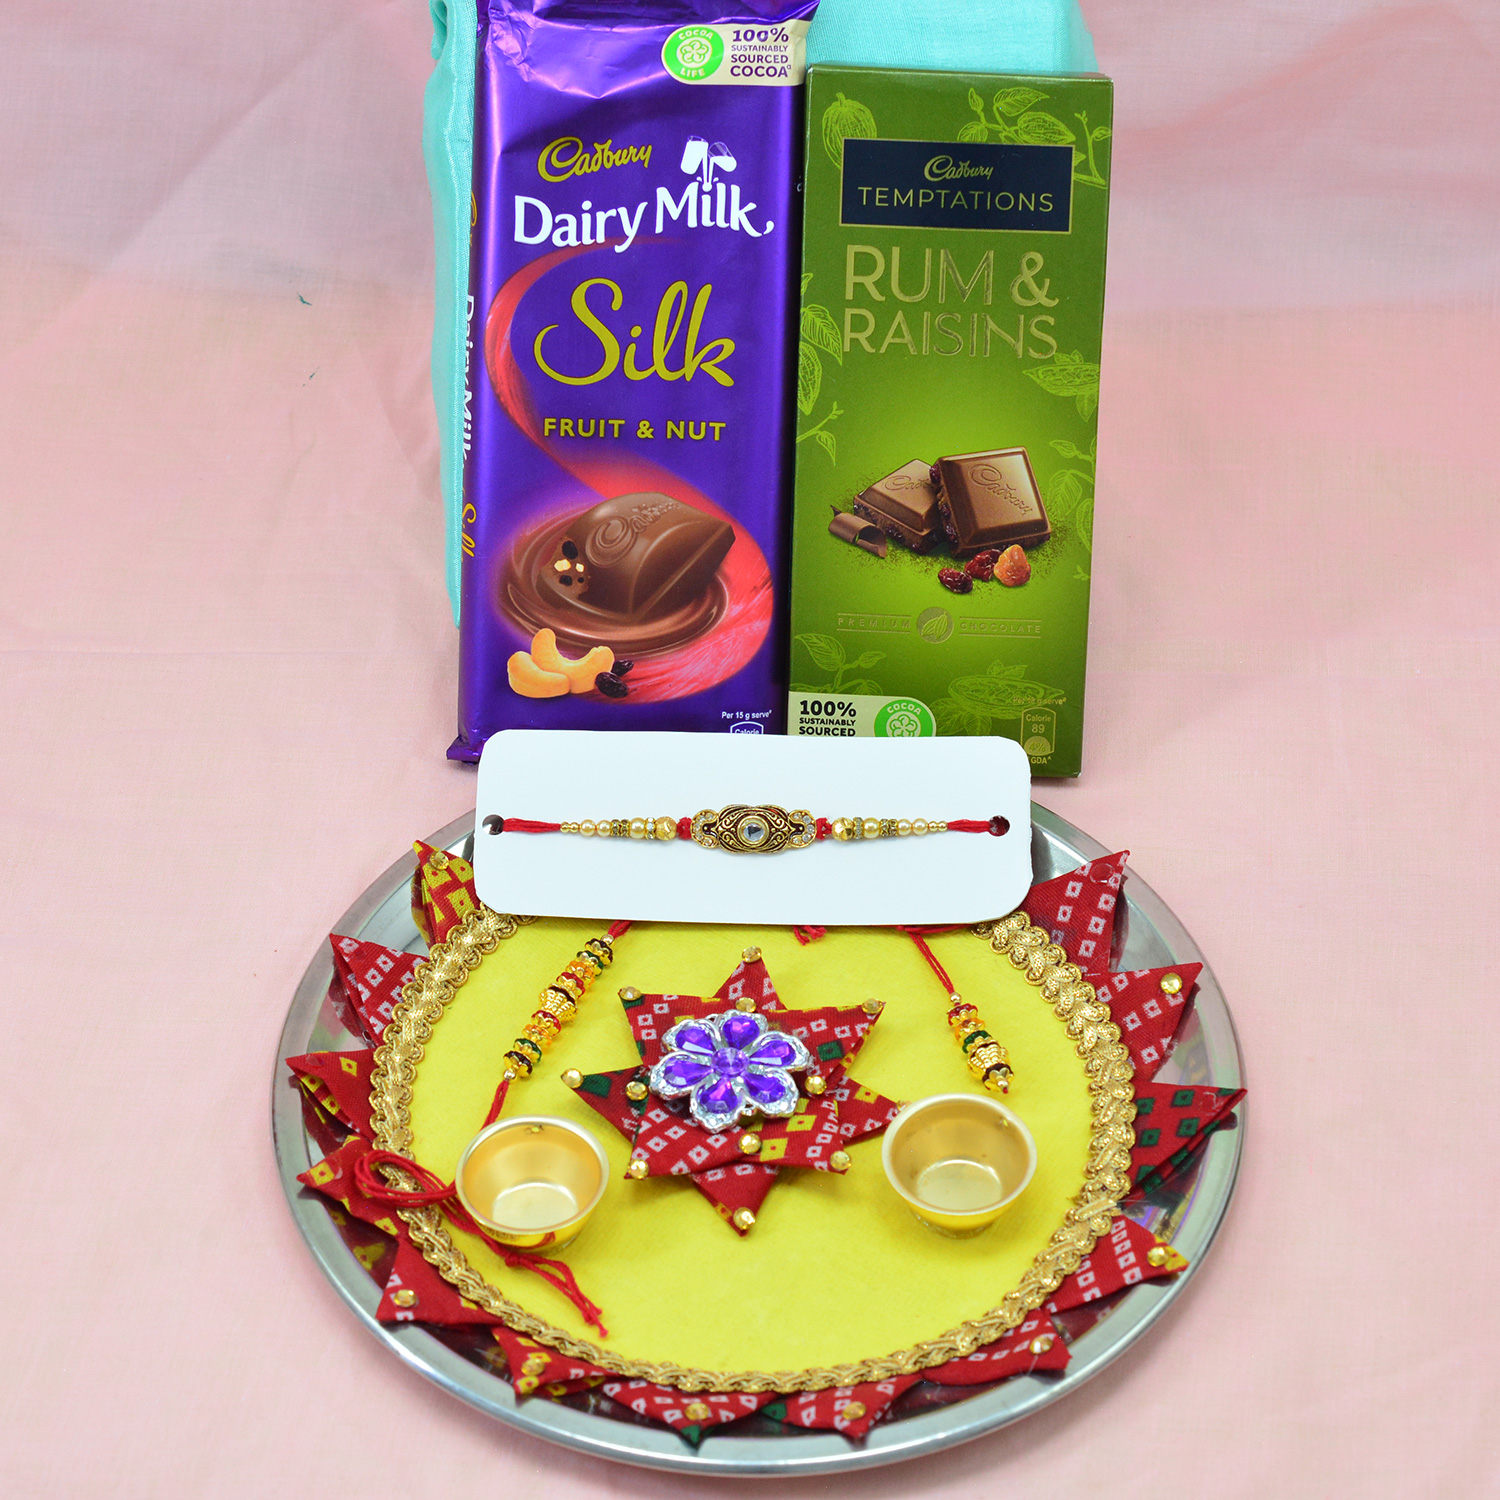 Cadbury Silk Fruit and Nut with Rum Raisins Chocolate and Awesome Looking New Rakhi Pooja Thali